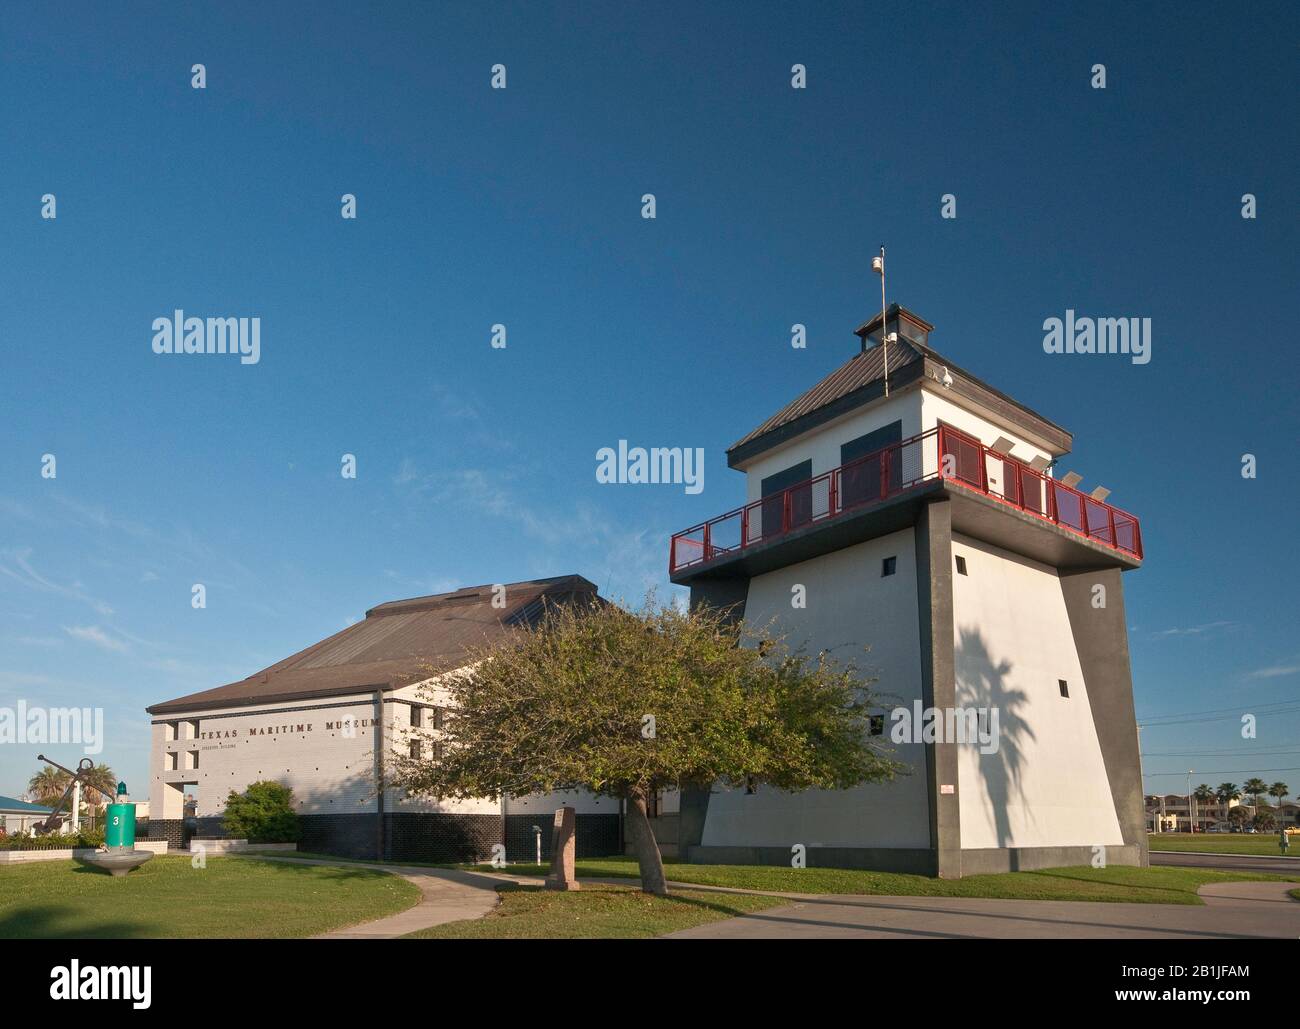 Texas Maritime Museum, Rockport, Gulf Coast, Texas, USA Stockfoto